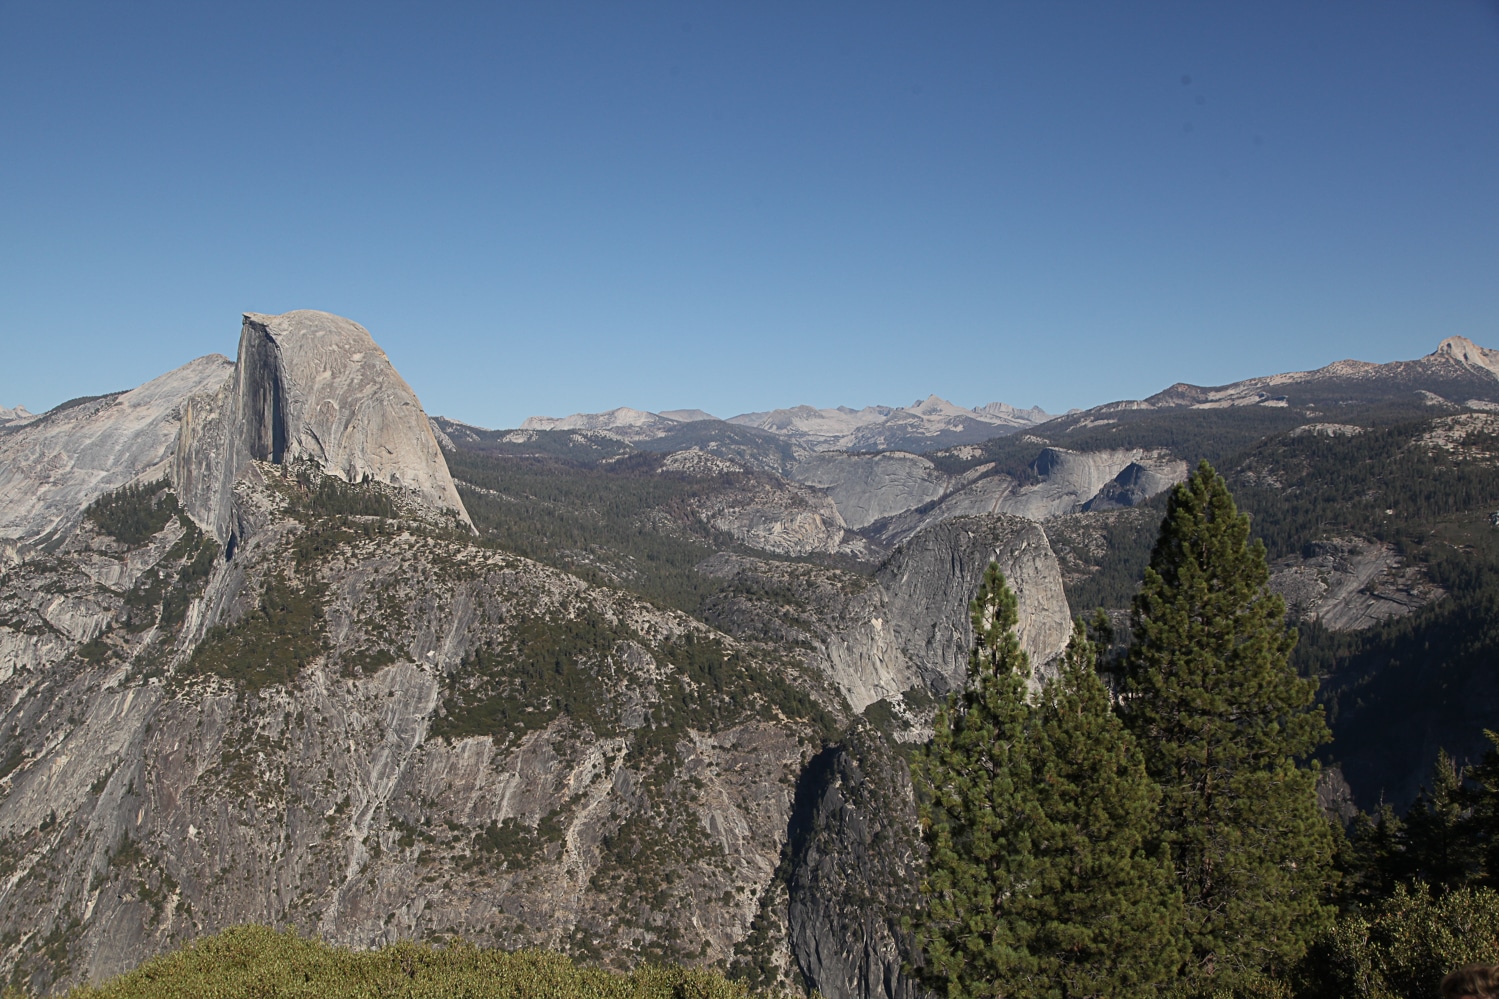 Yosemite adventures: Travel series